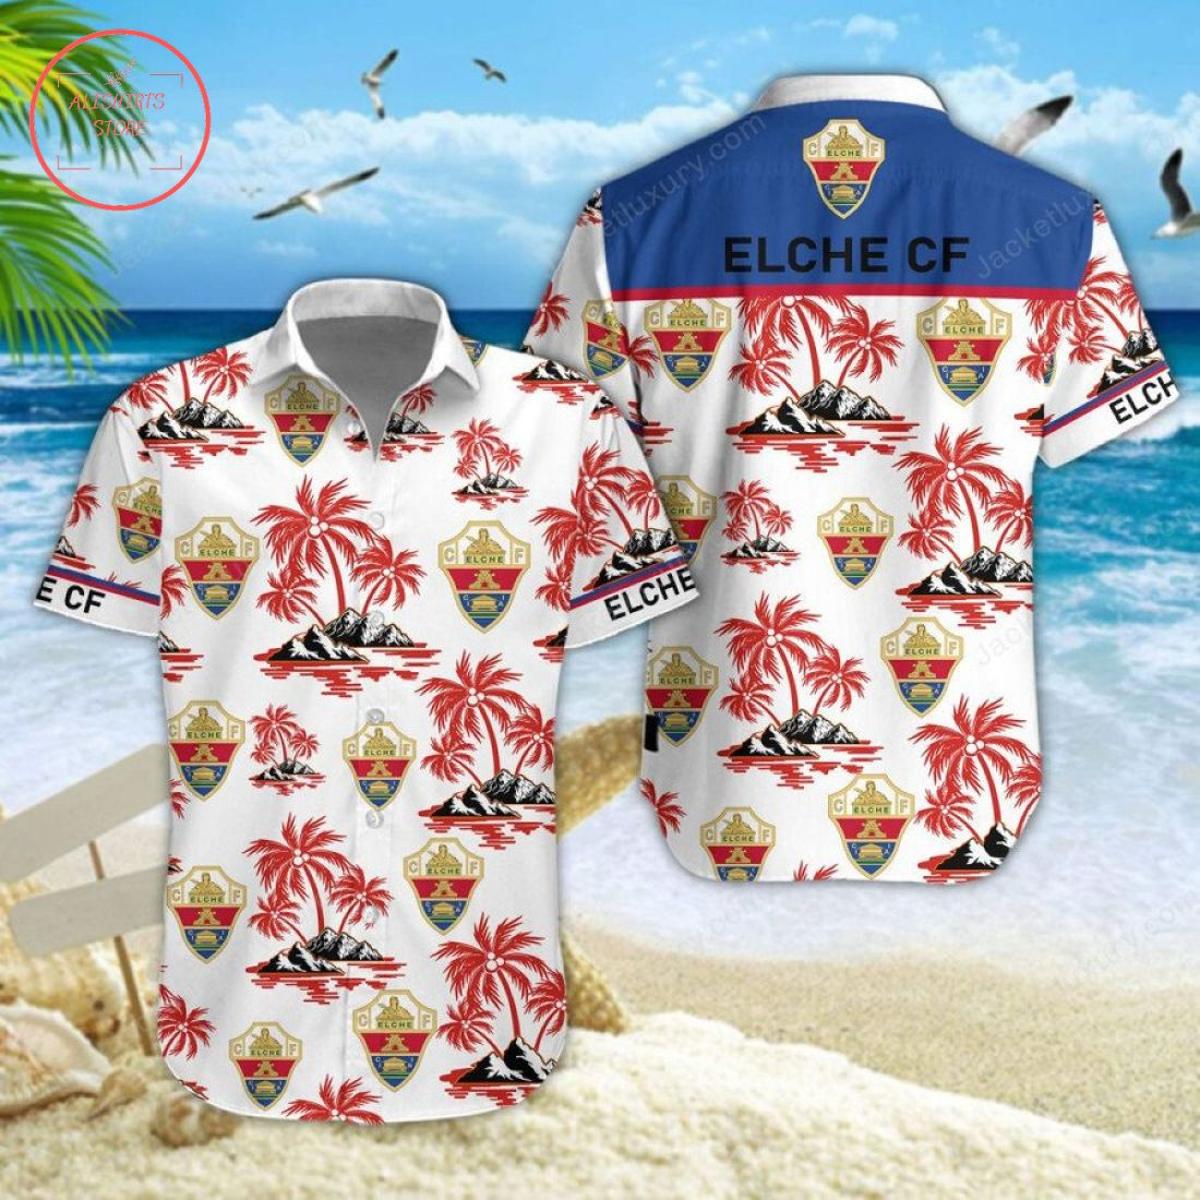 Elche Cf Coconut Island White Red Tropical Hawaiian Shirt Gift Ideas